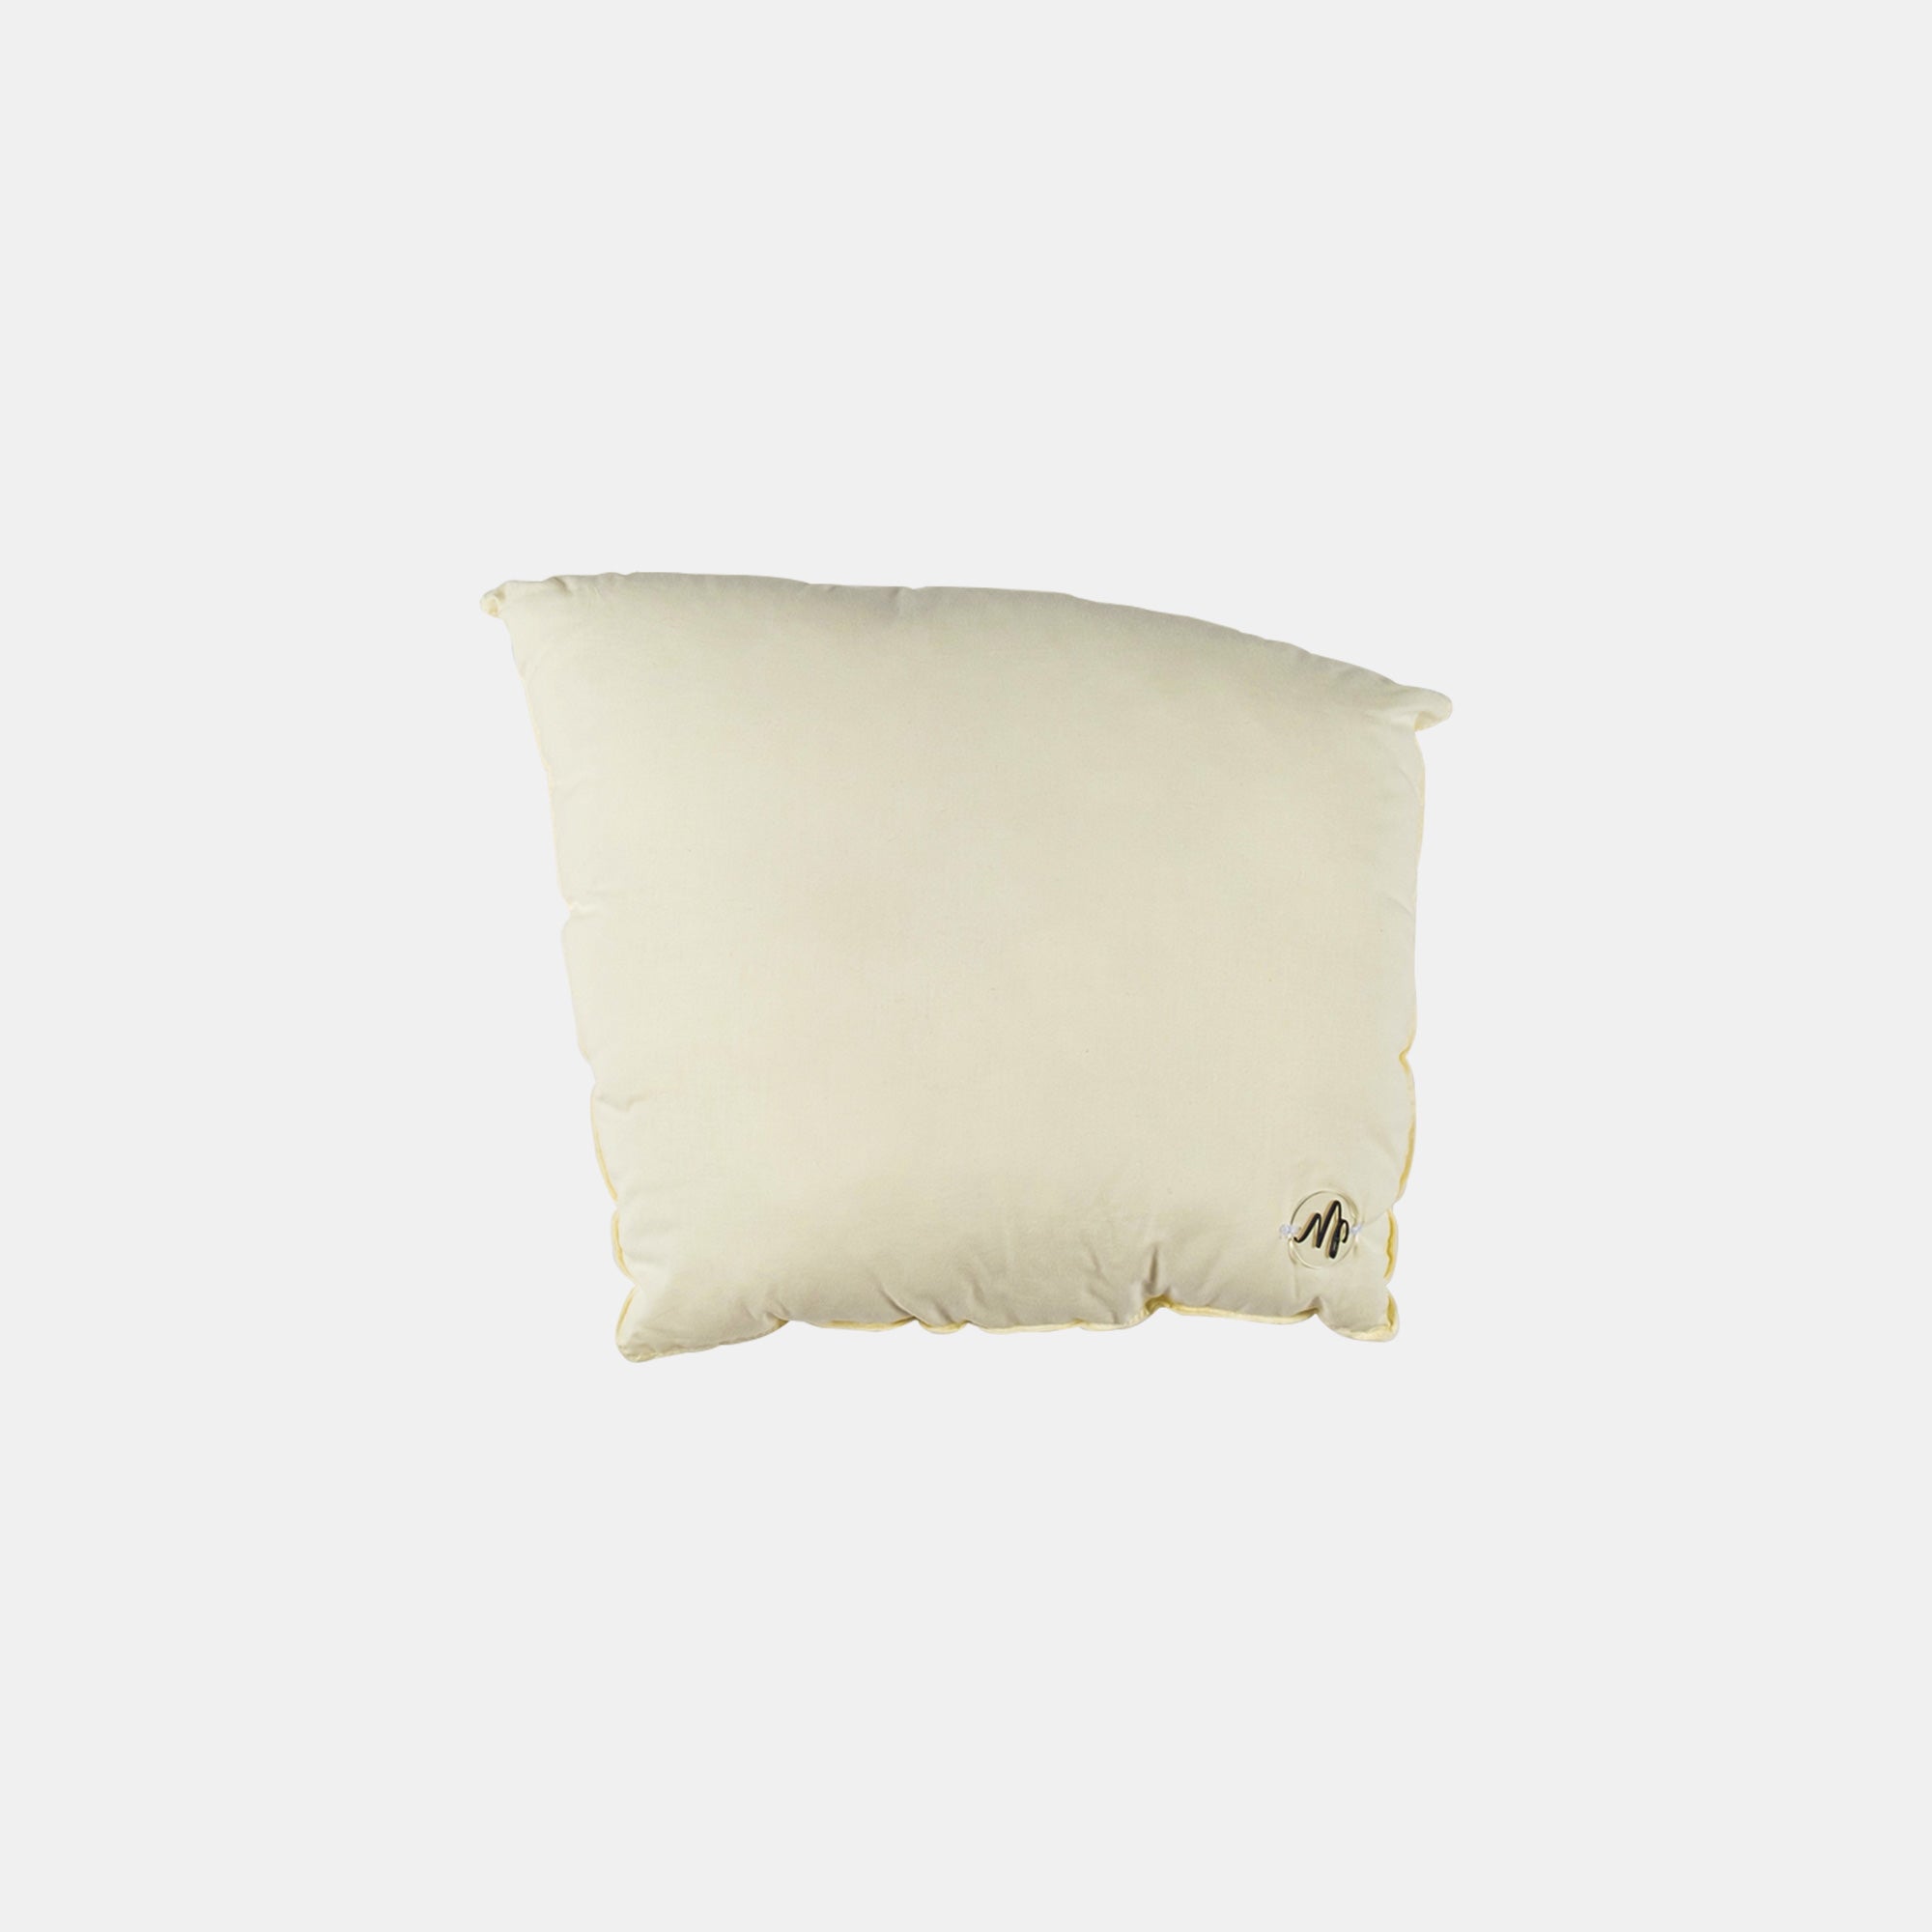 Handmade square shaped cushion